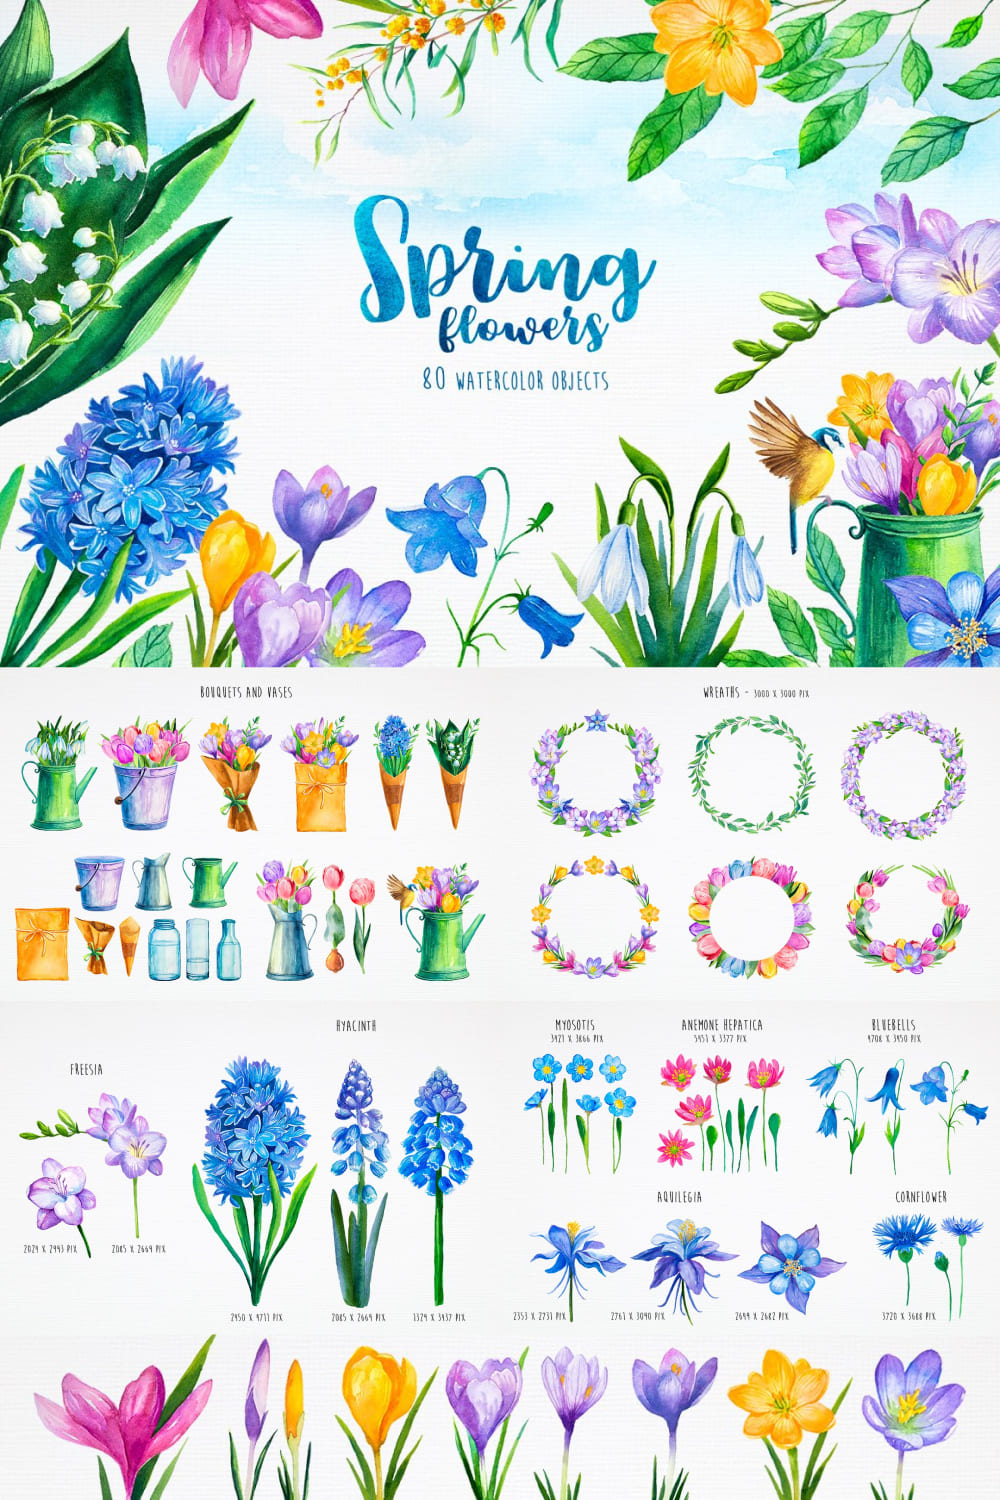 Spring Flowers. Watercolor pinterest image.